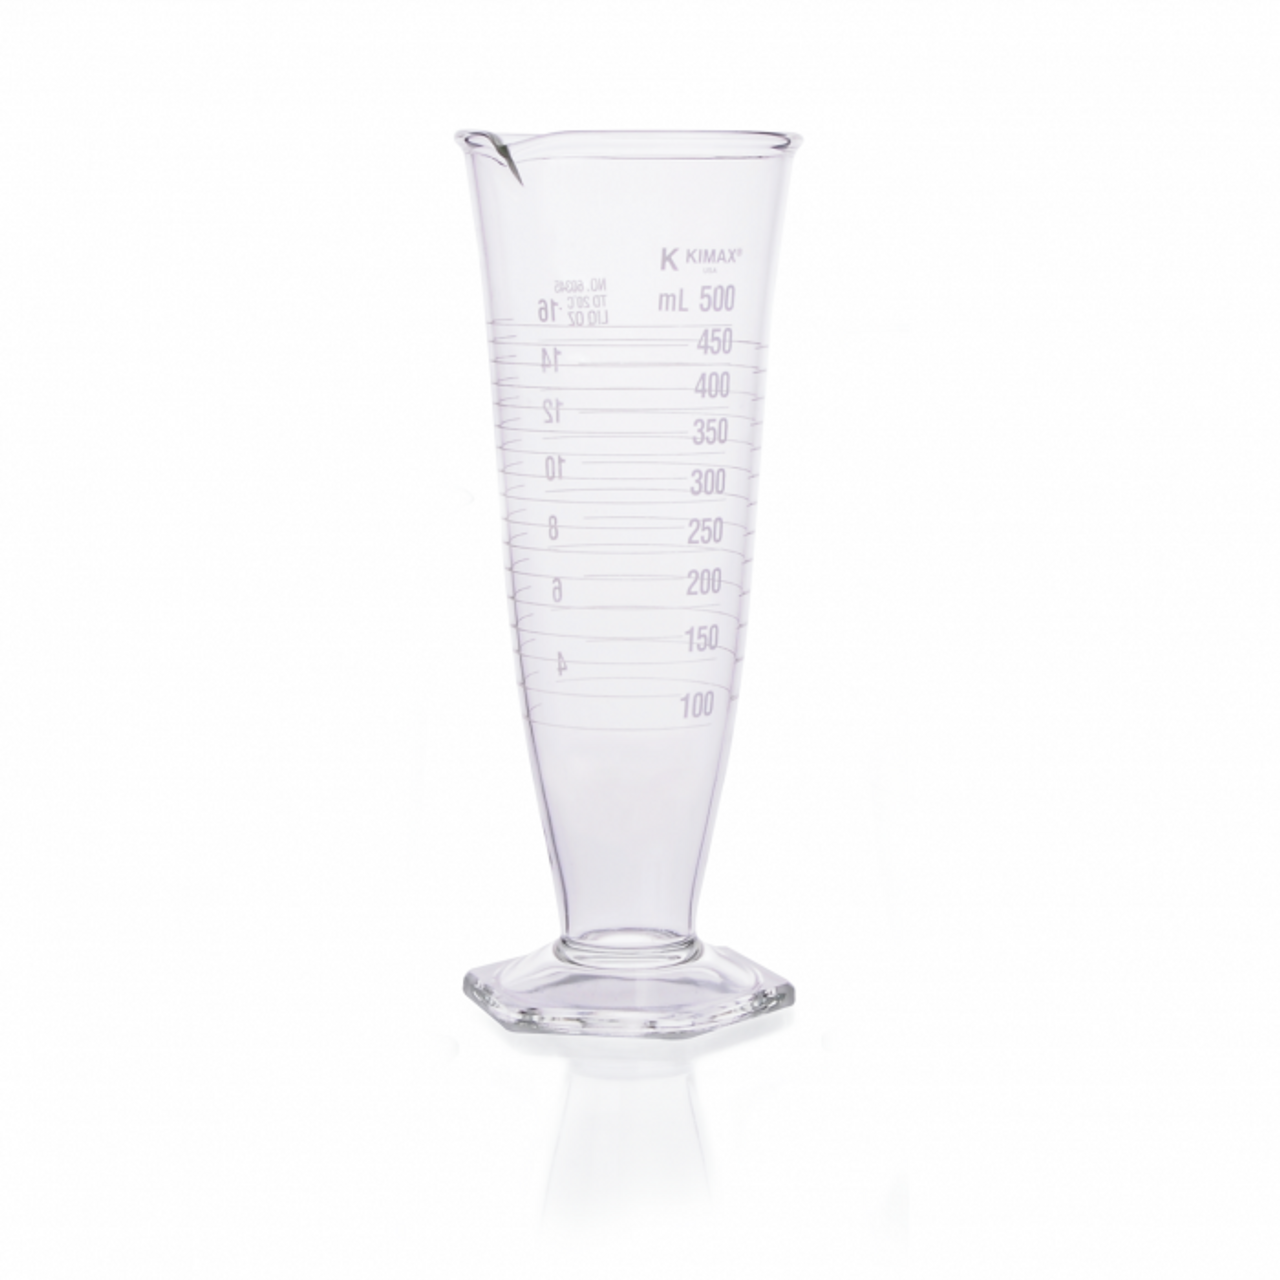 Pesticide Measuring Cups - Where to buy Measuring Cups - 4 - 64 Oz - Gallon